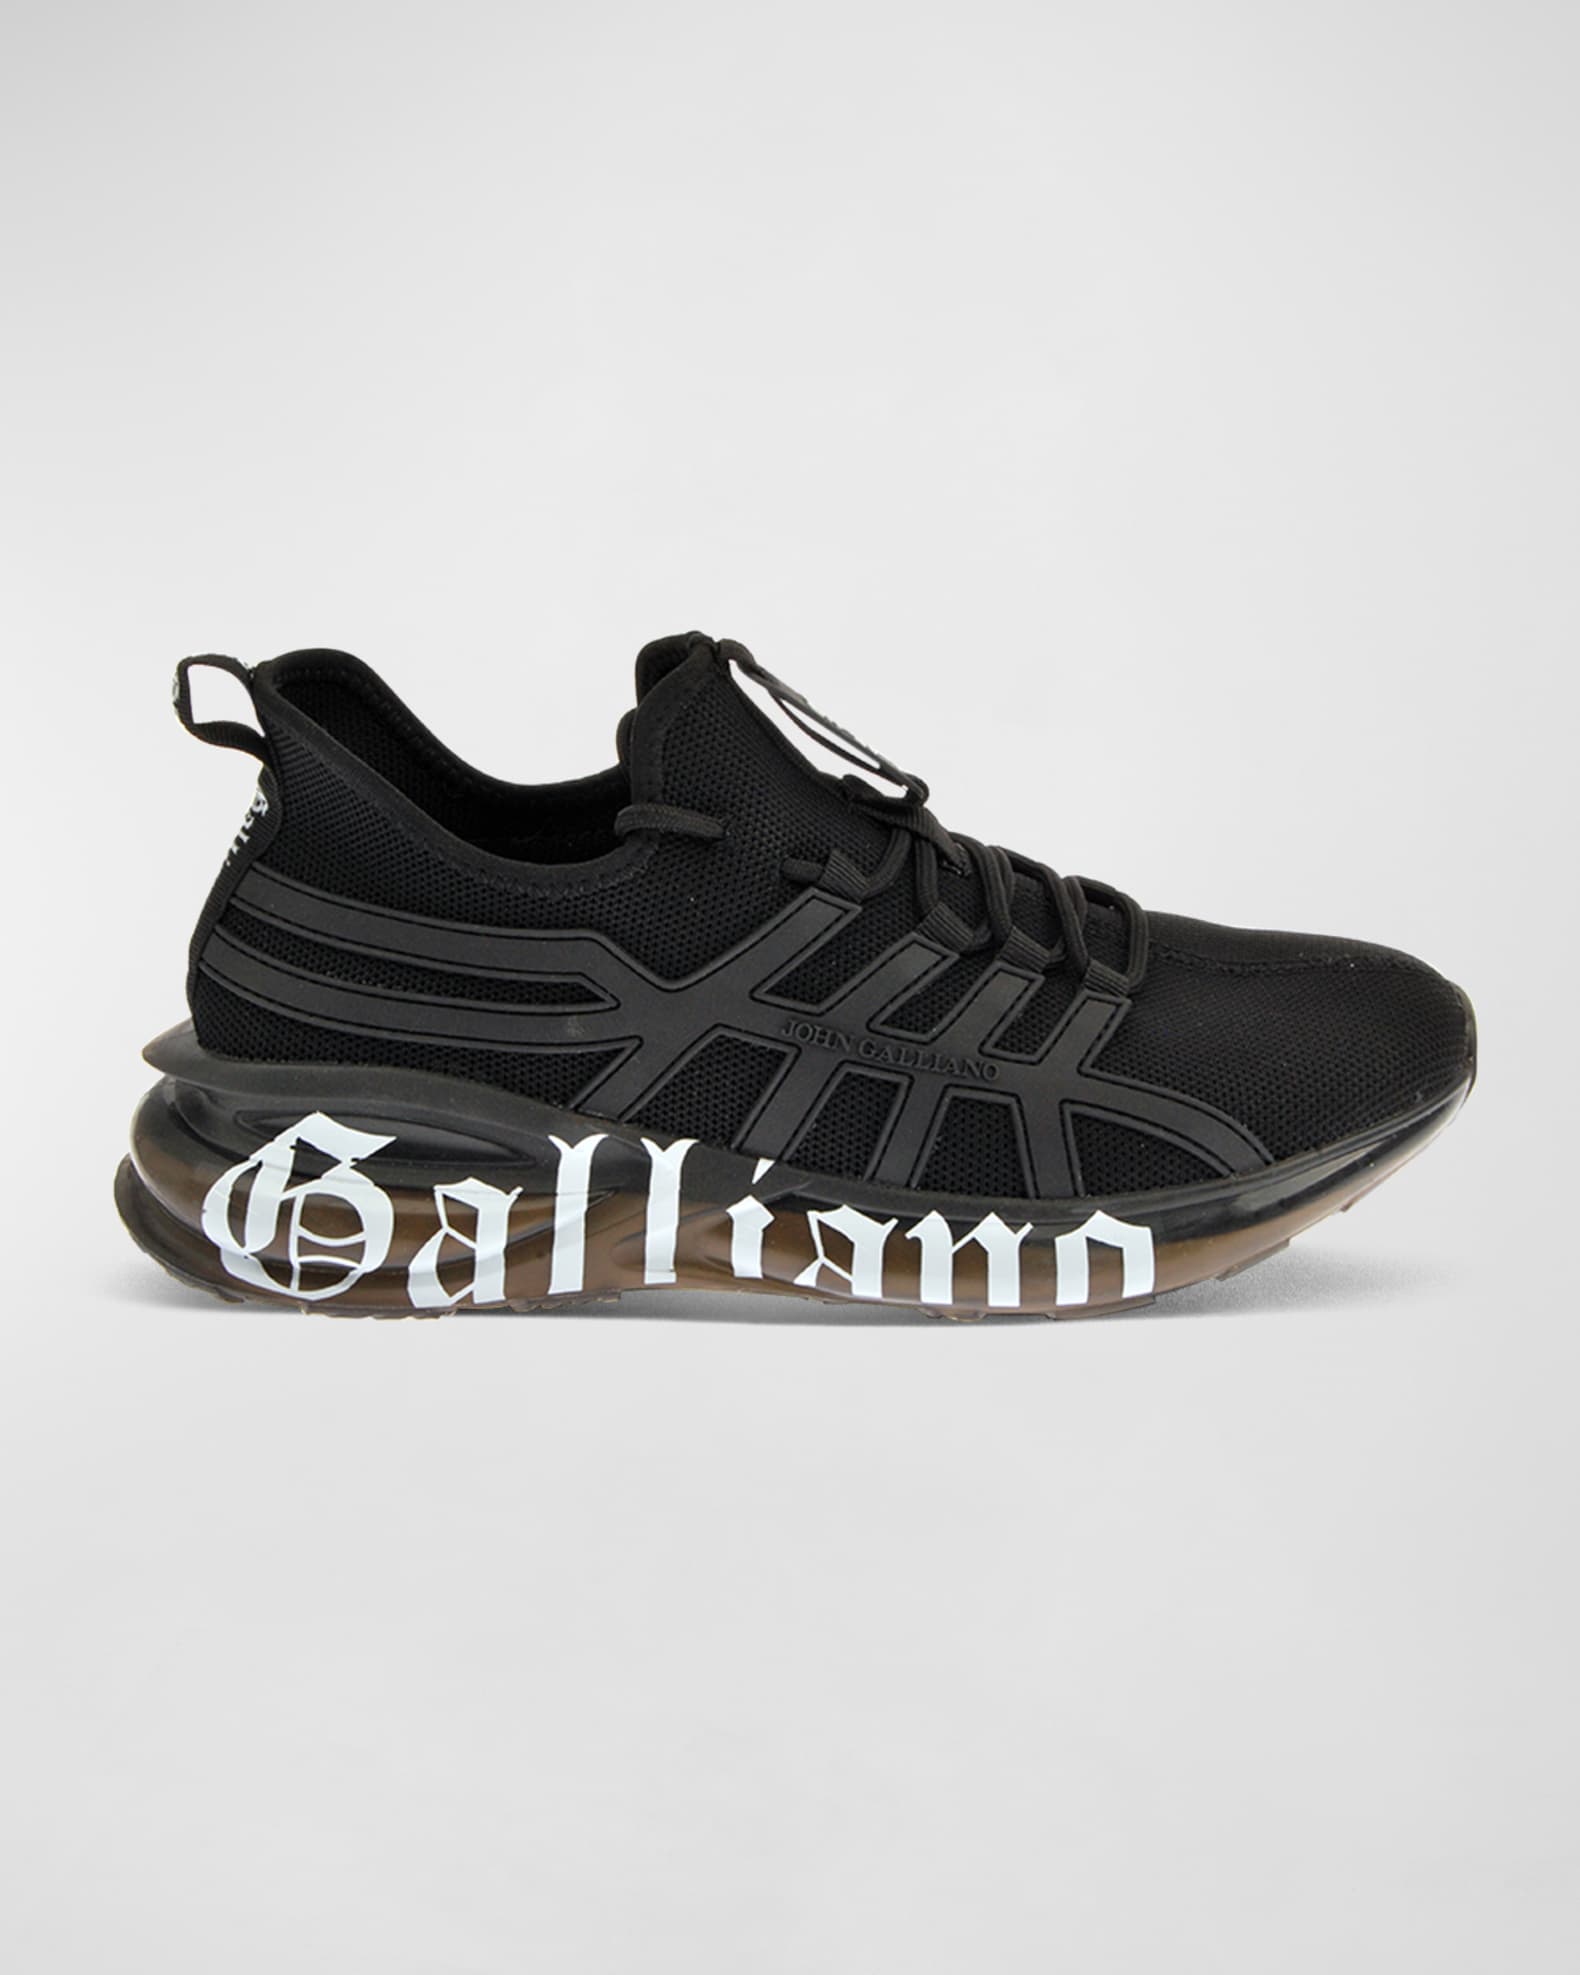 John Galliano High Fashion Sneakers